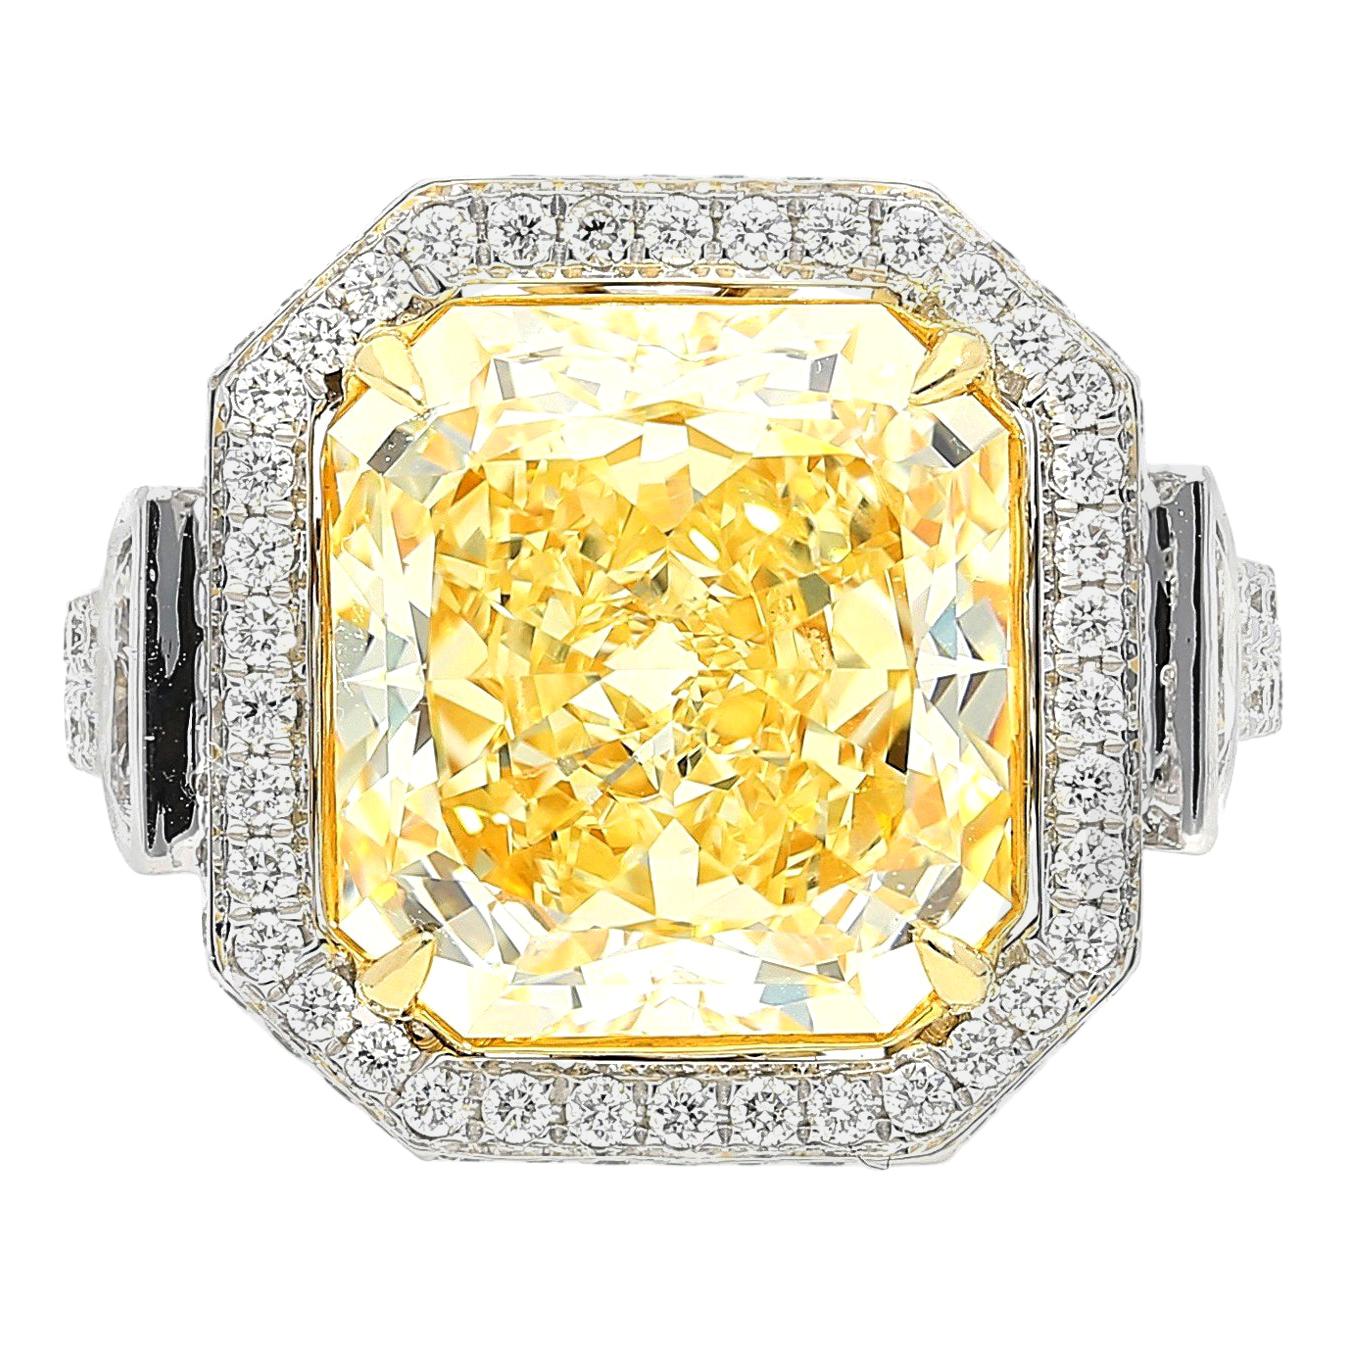 GIA Certified 7.52 Carat Radiant-Cut VVS2 Clarity Fancy Yellow Diamond Ring